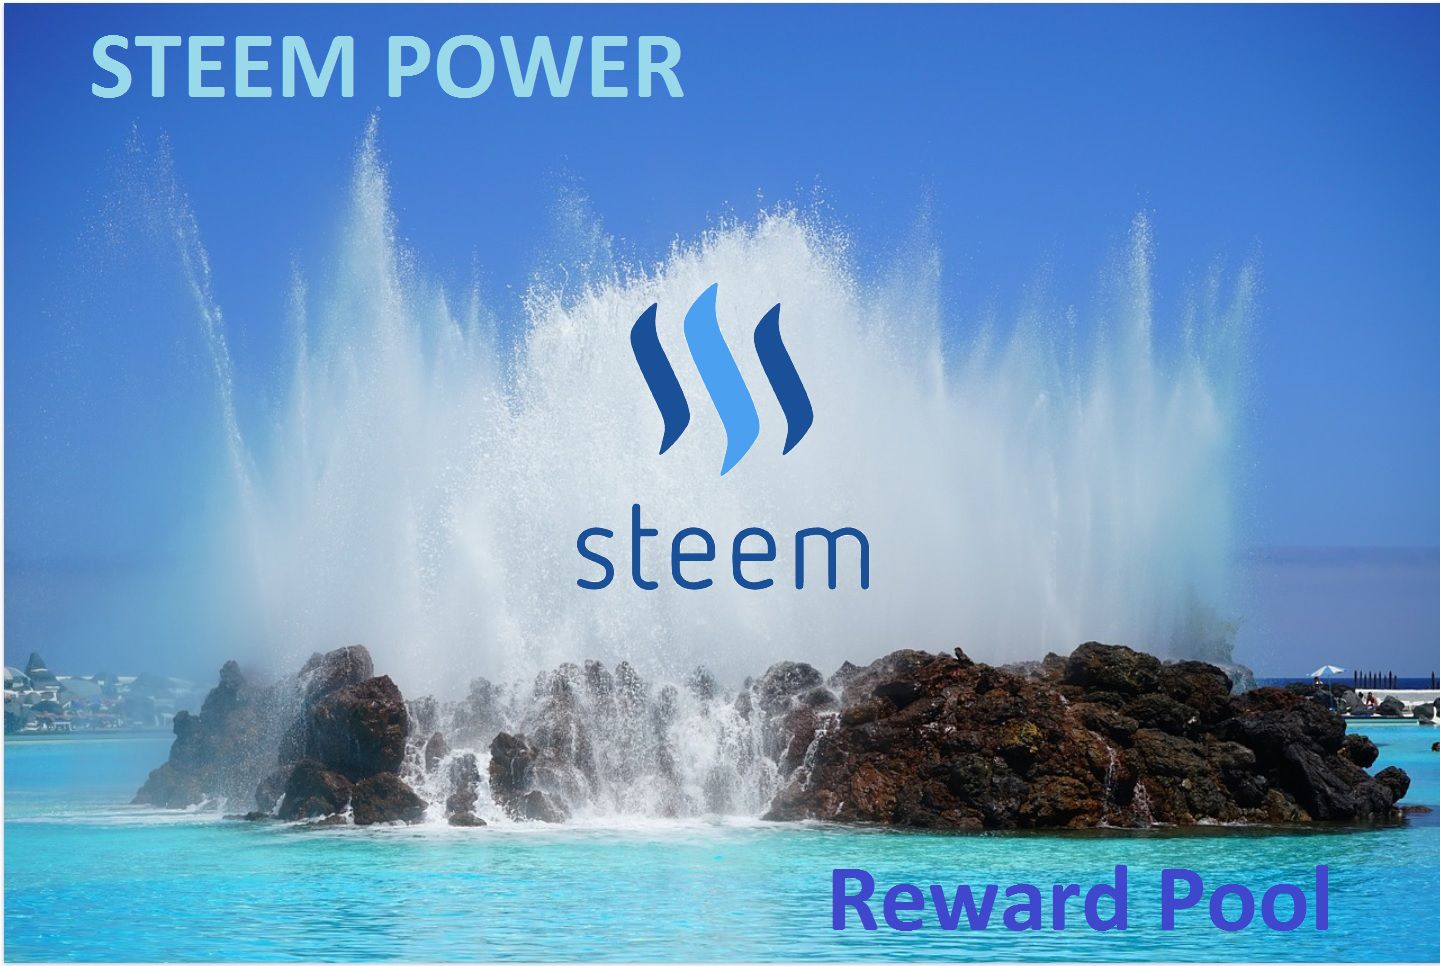 Uncountable Reasons to Power Up your Steem - Reward Pool Steem Power - Steemit - Blockchain.jpg